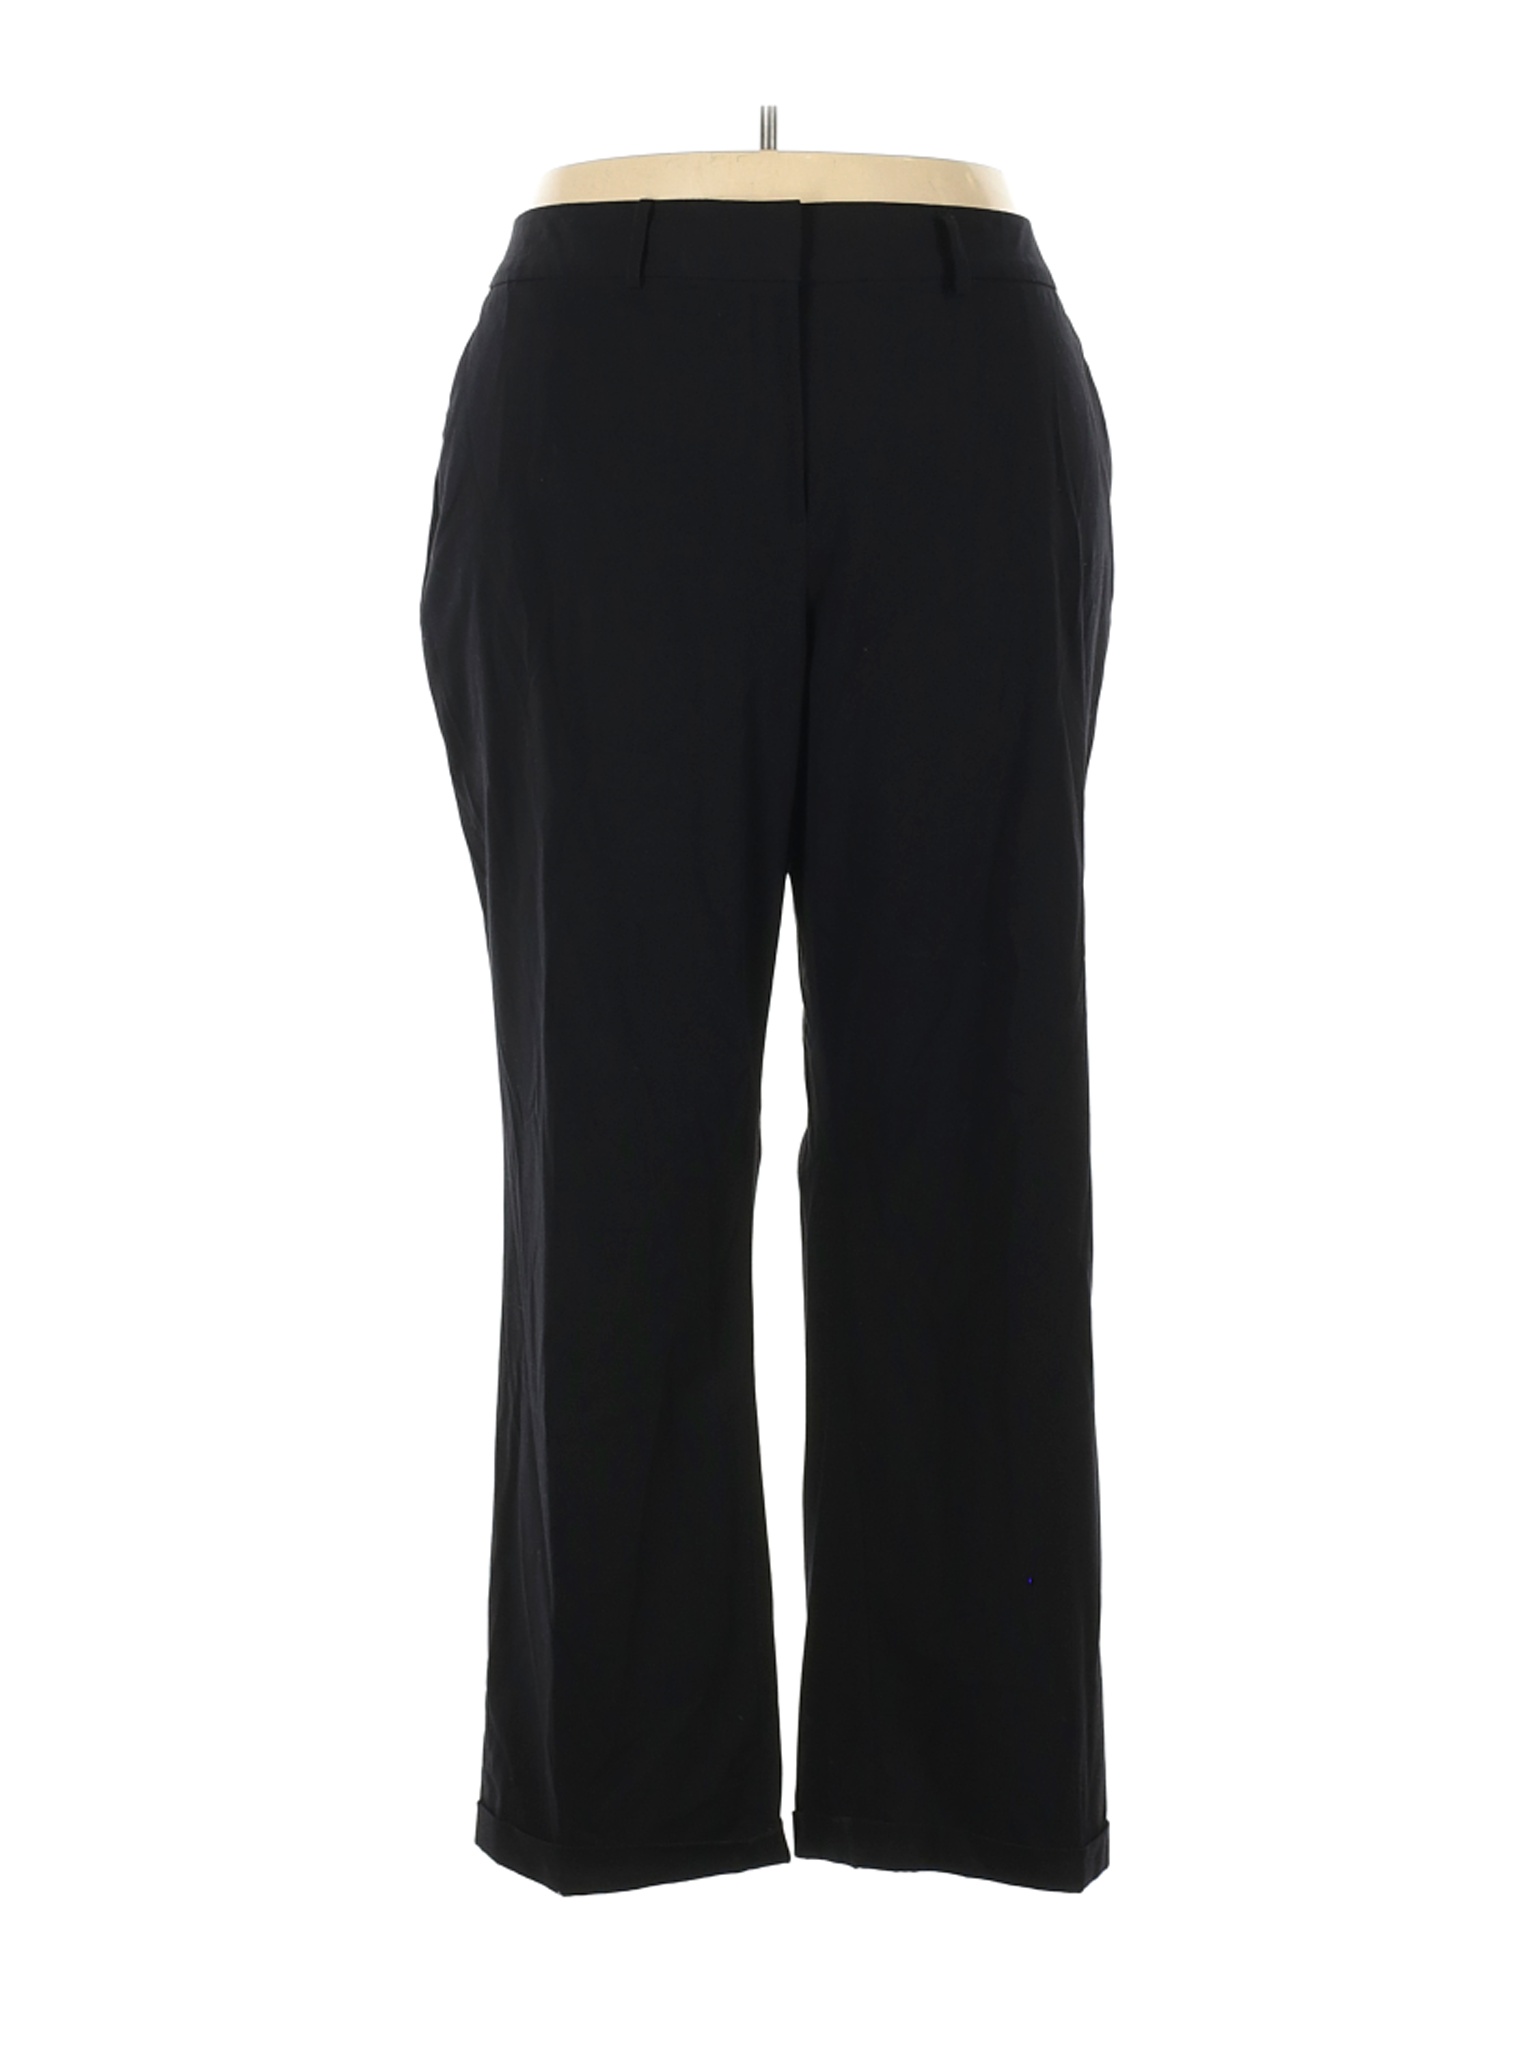 Liz Claiborne Women Black Dress Pants 24 Plus | eBay